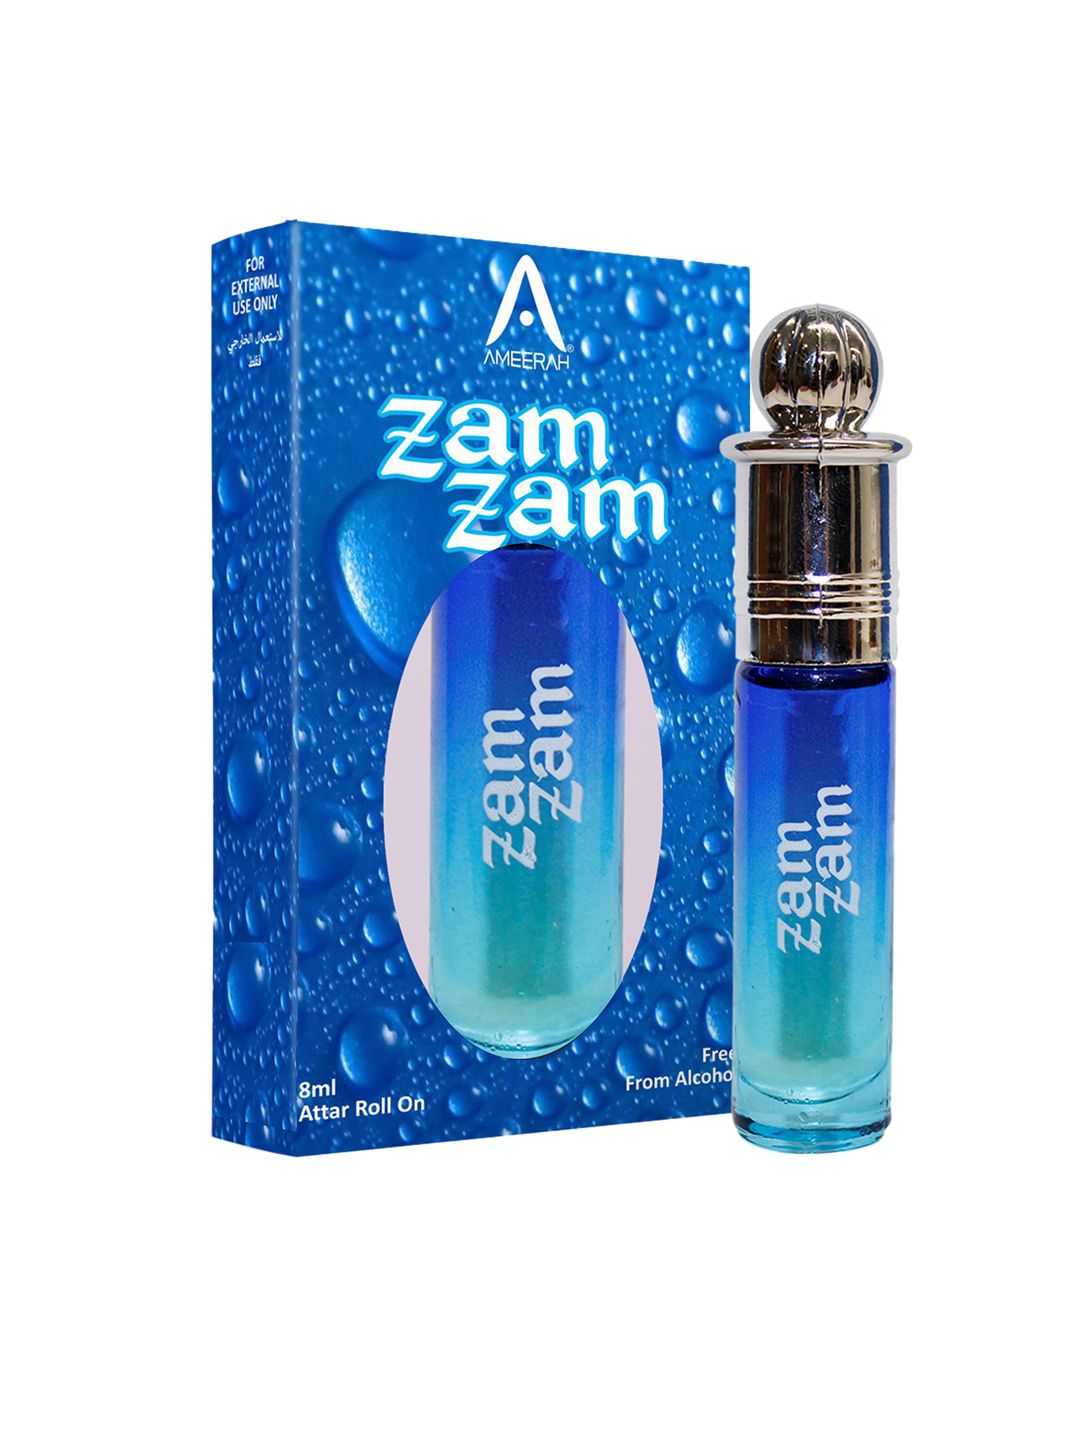 St. John Ameerah Zam Zam Attar Roll On - 8 ml Price in India